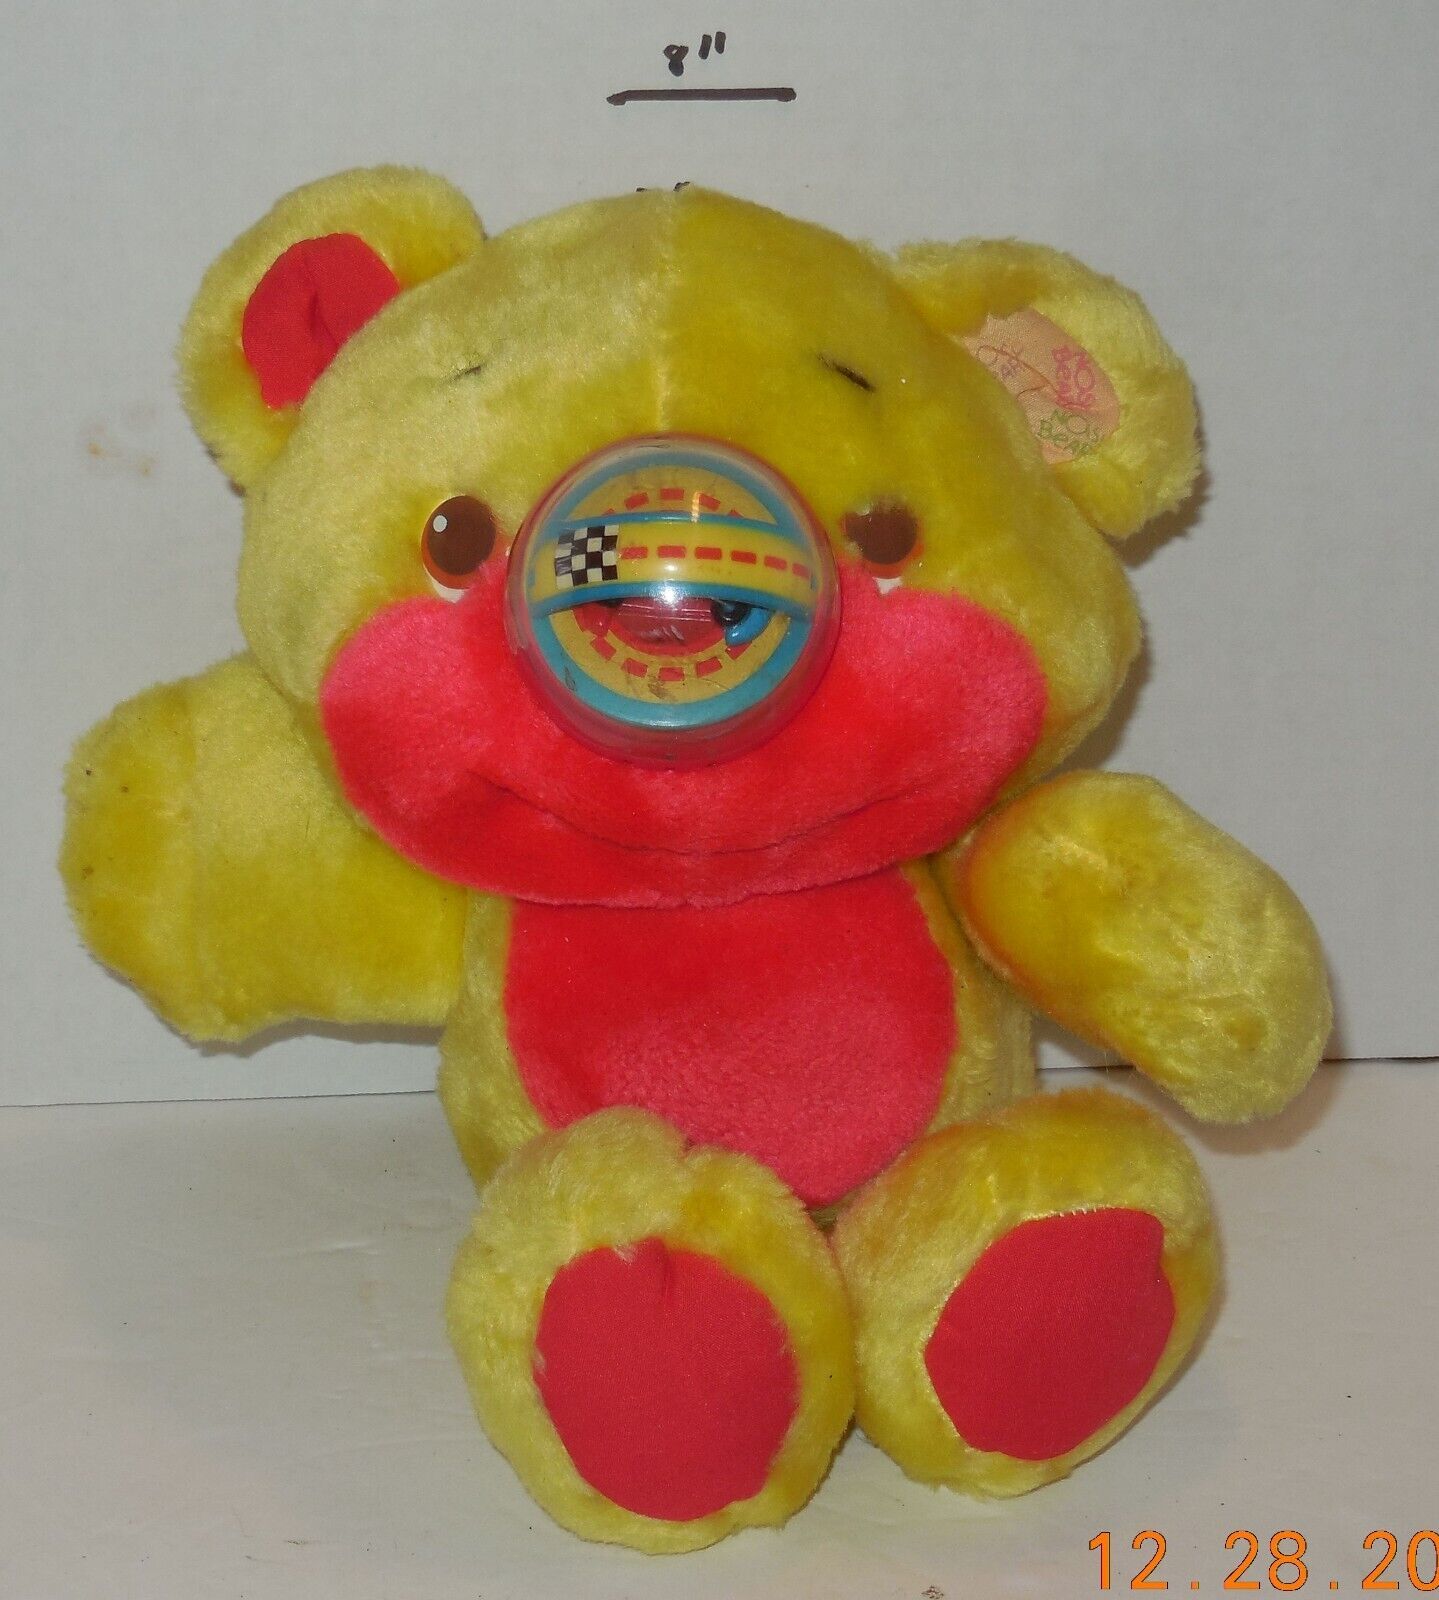 Vintage 1987 Playskool Nosy Bear Hotrod Plush Yellow Red 11" Stuffed Animal Rare - $74.25